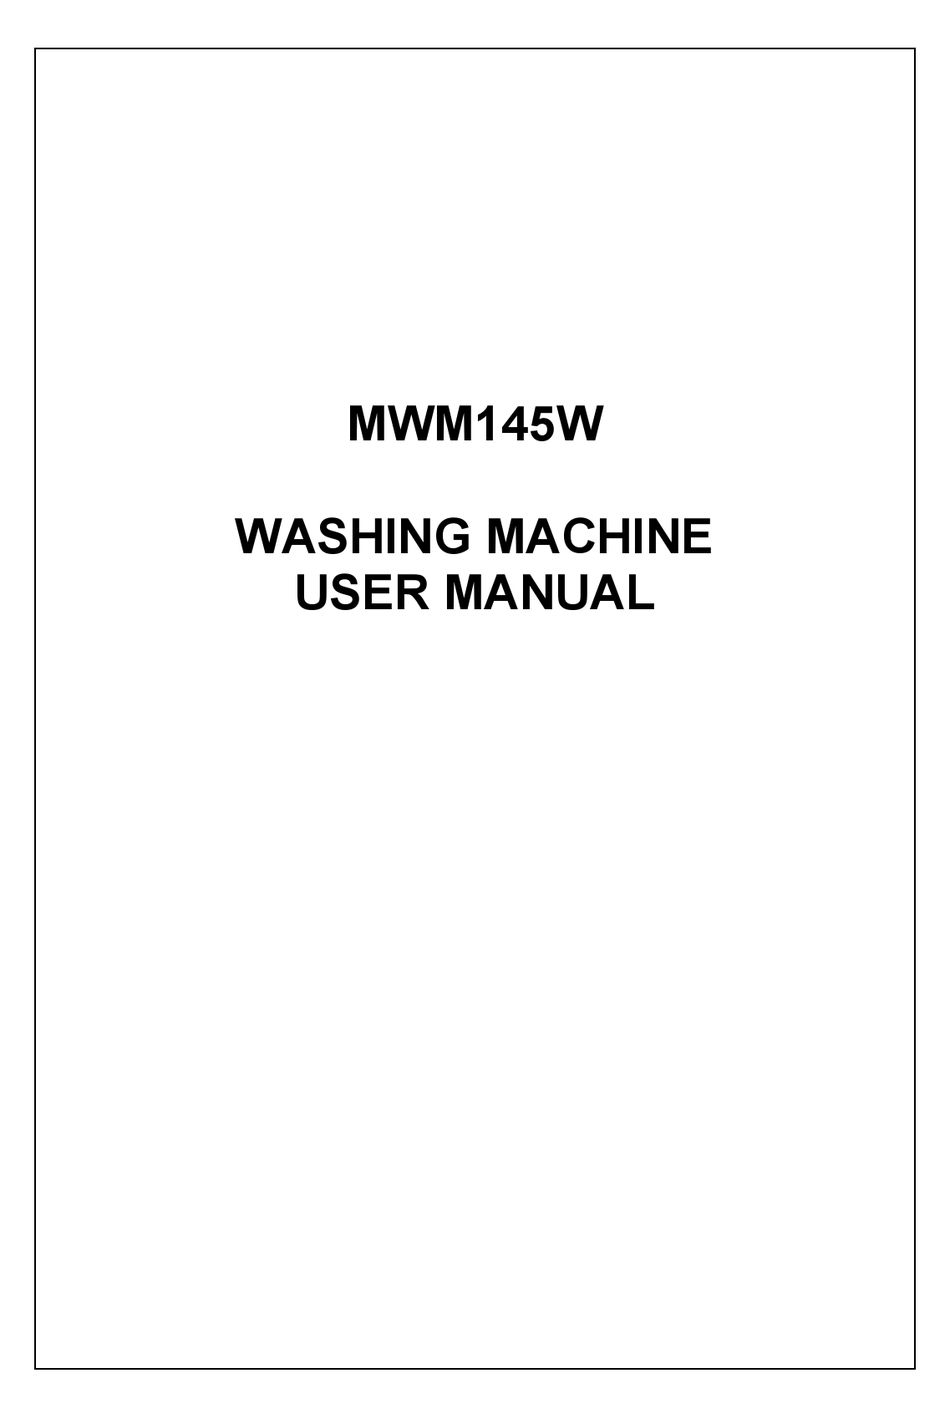 Matsui m100wm10e manual